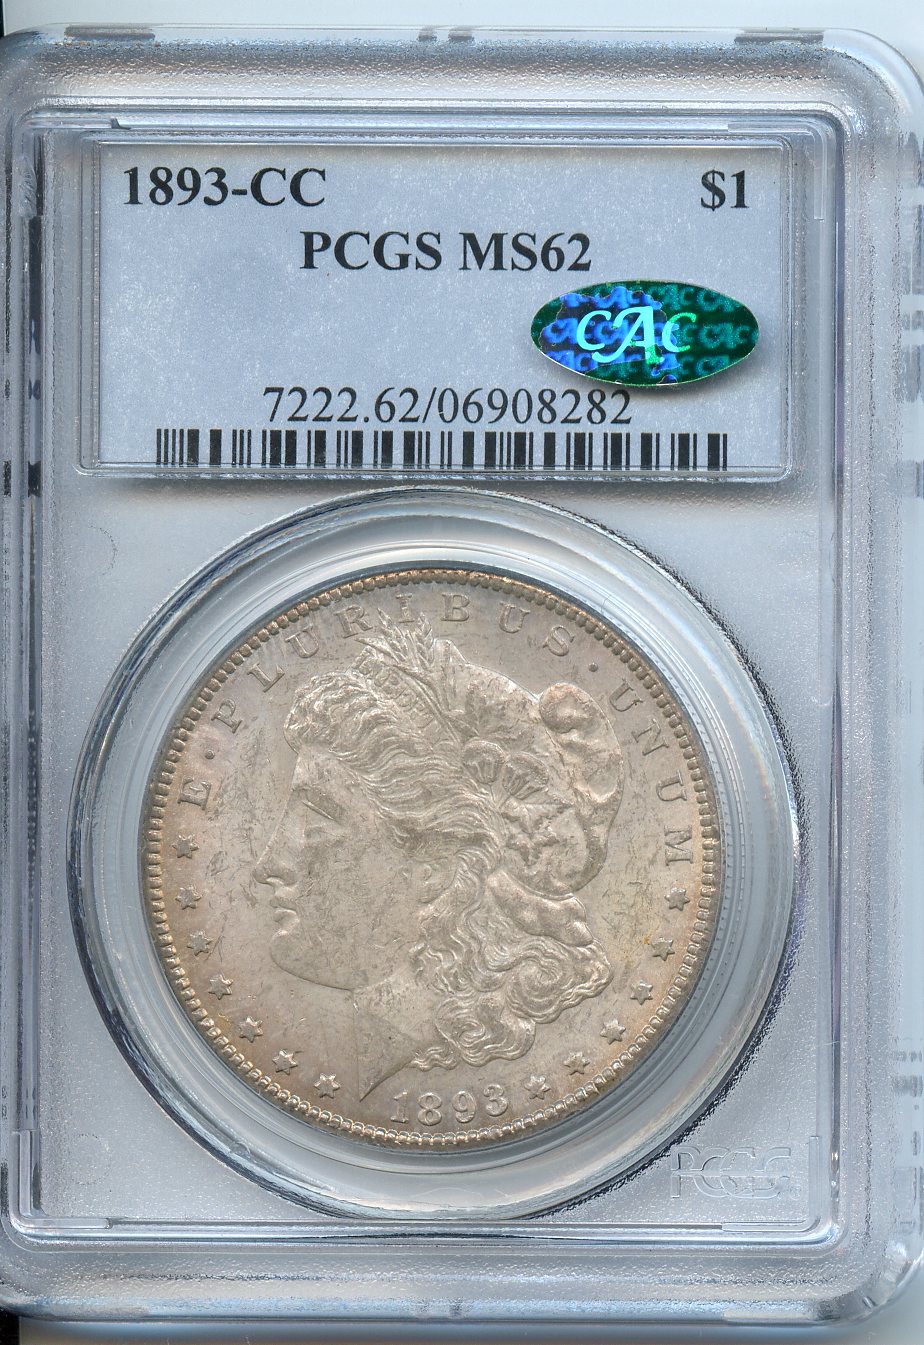 1893 CC $1  PCGS  MS62  CAC  Morgan Dollar